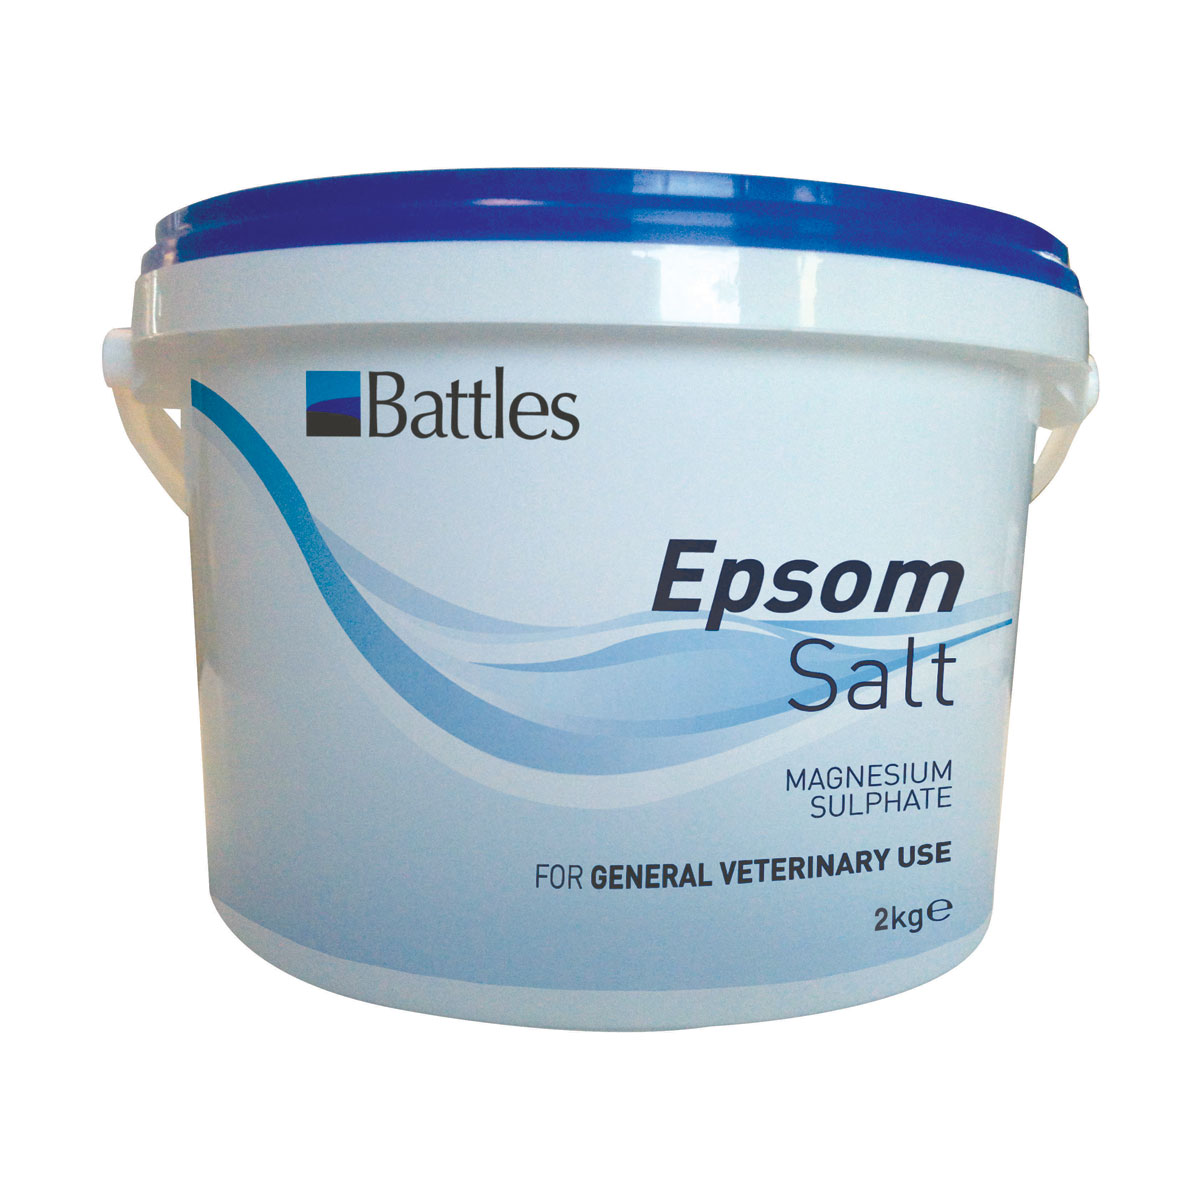 Battles Epsom Salts